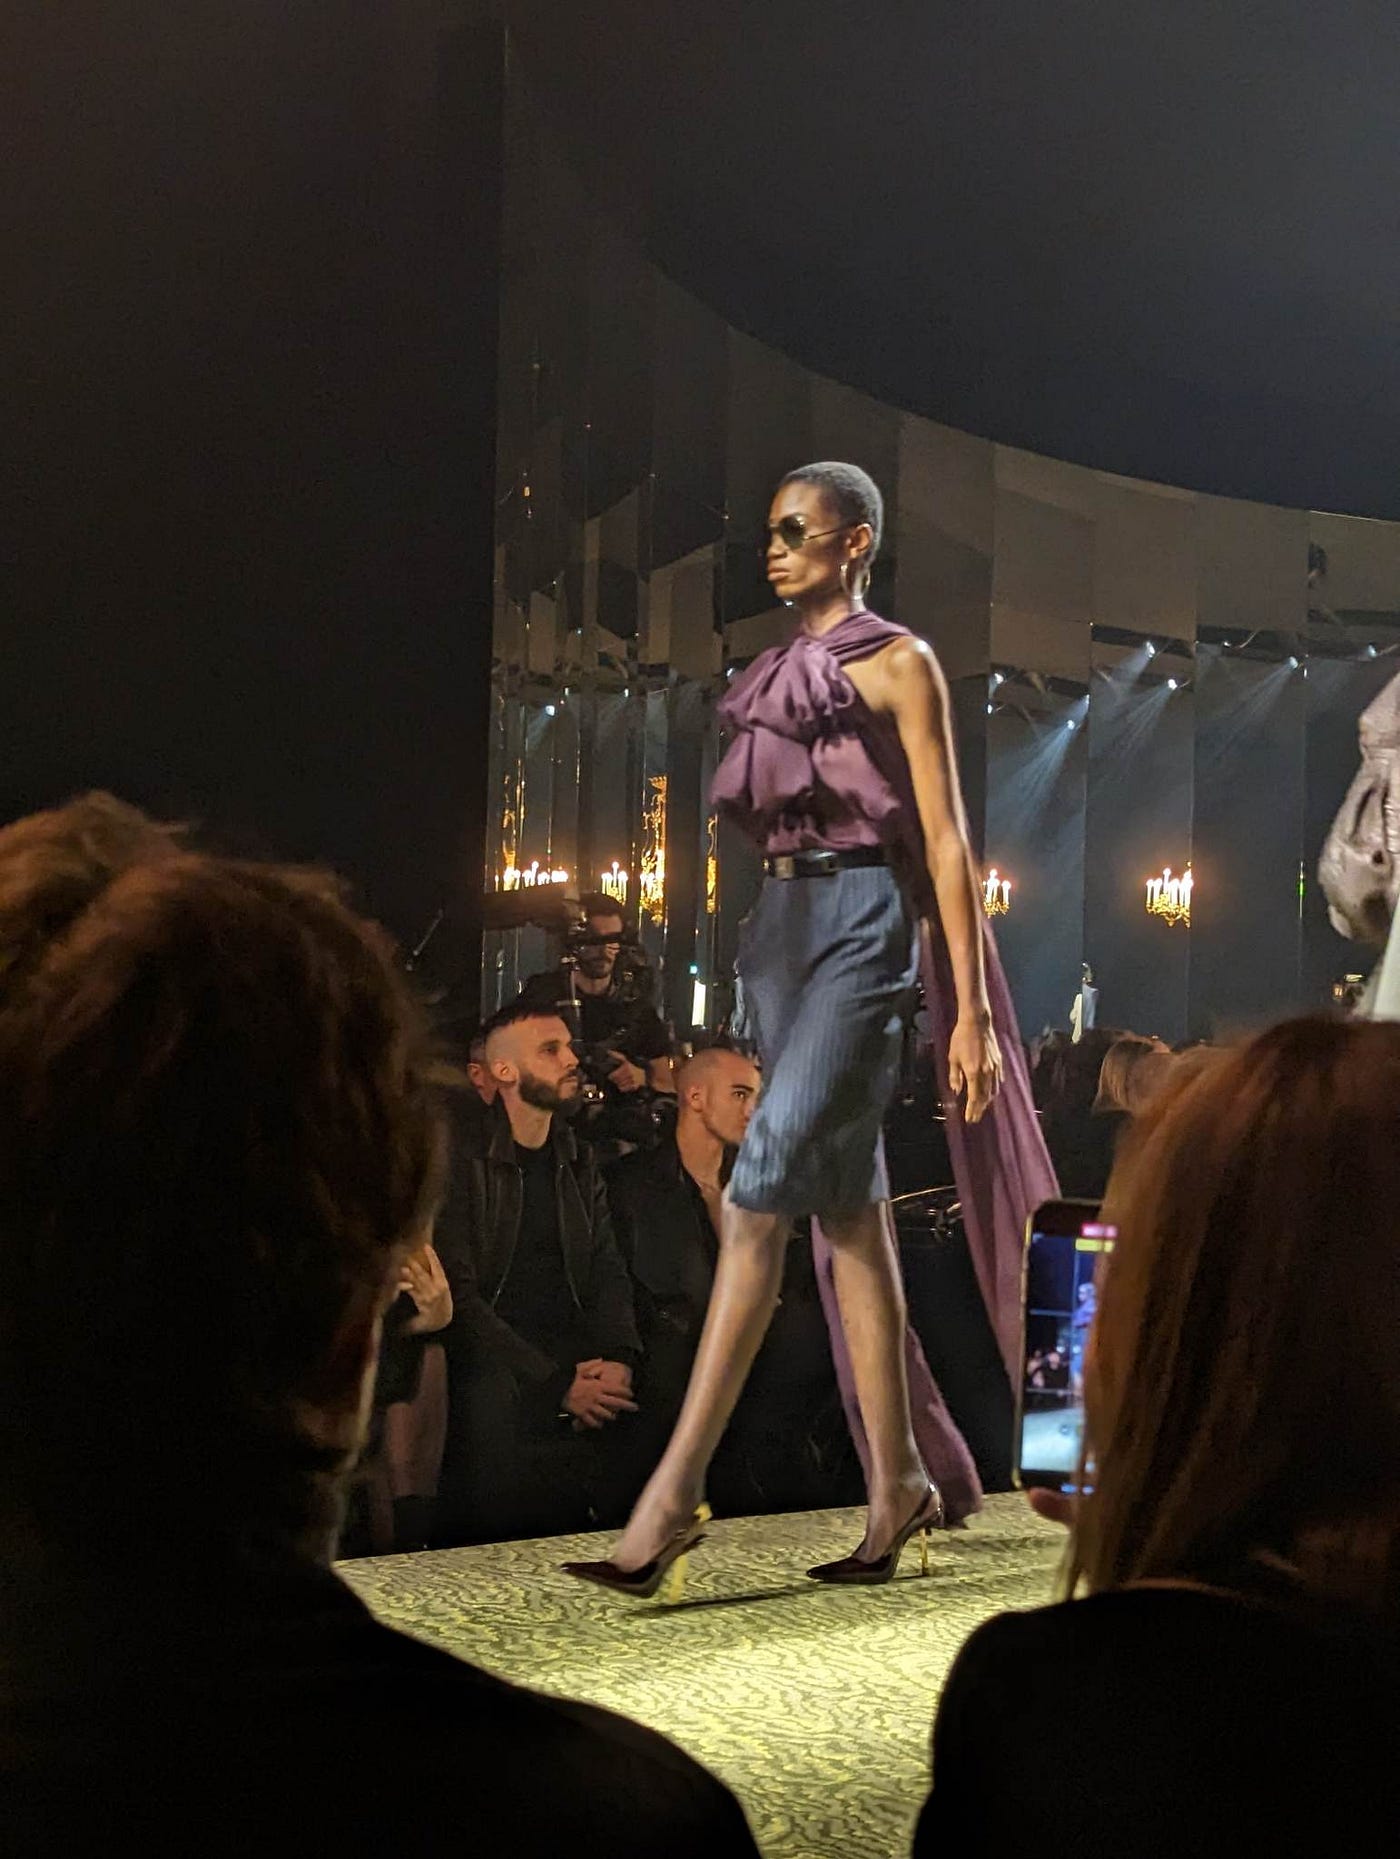 Yves Saint Laurent Shows Strong Shoulders at Paris Fashion Week